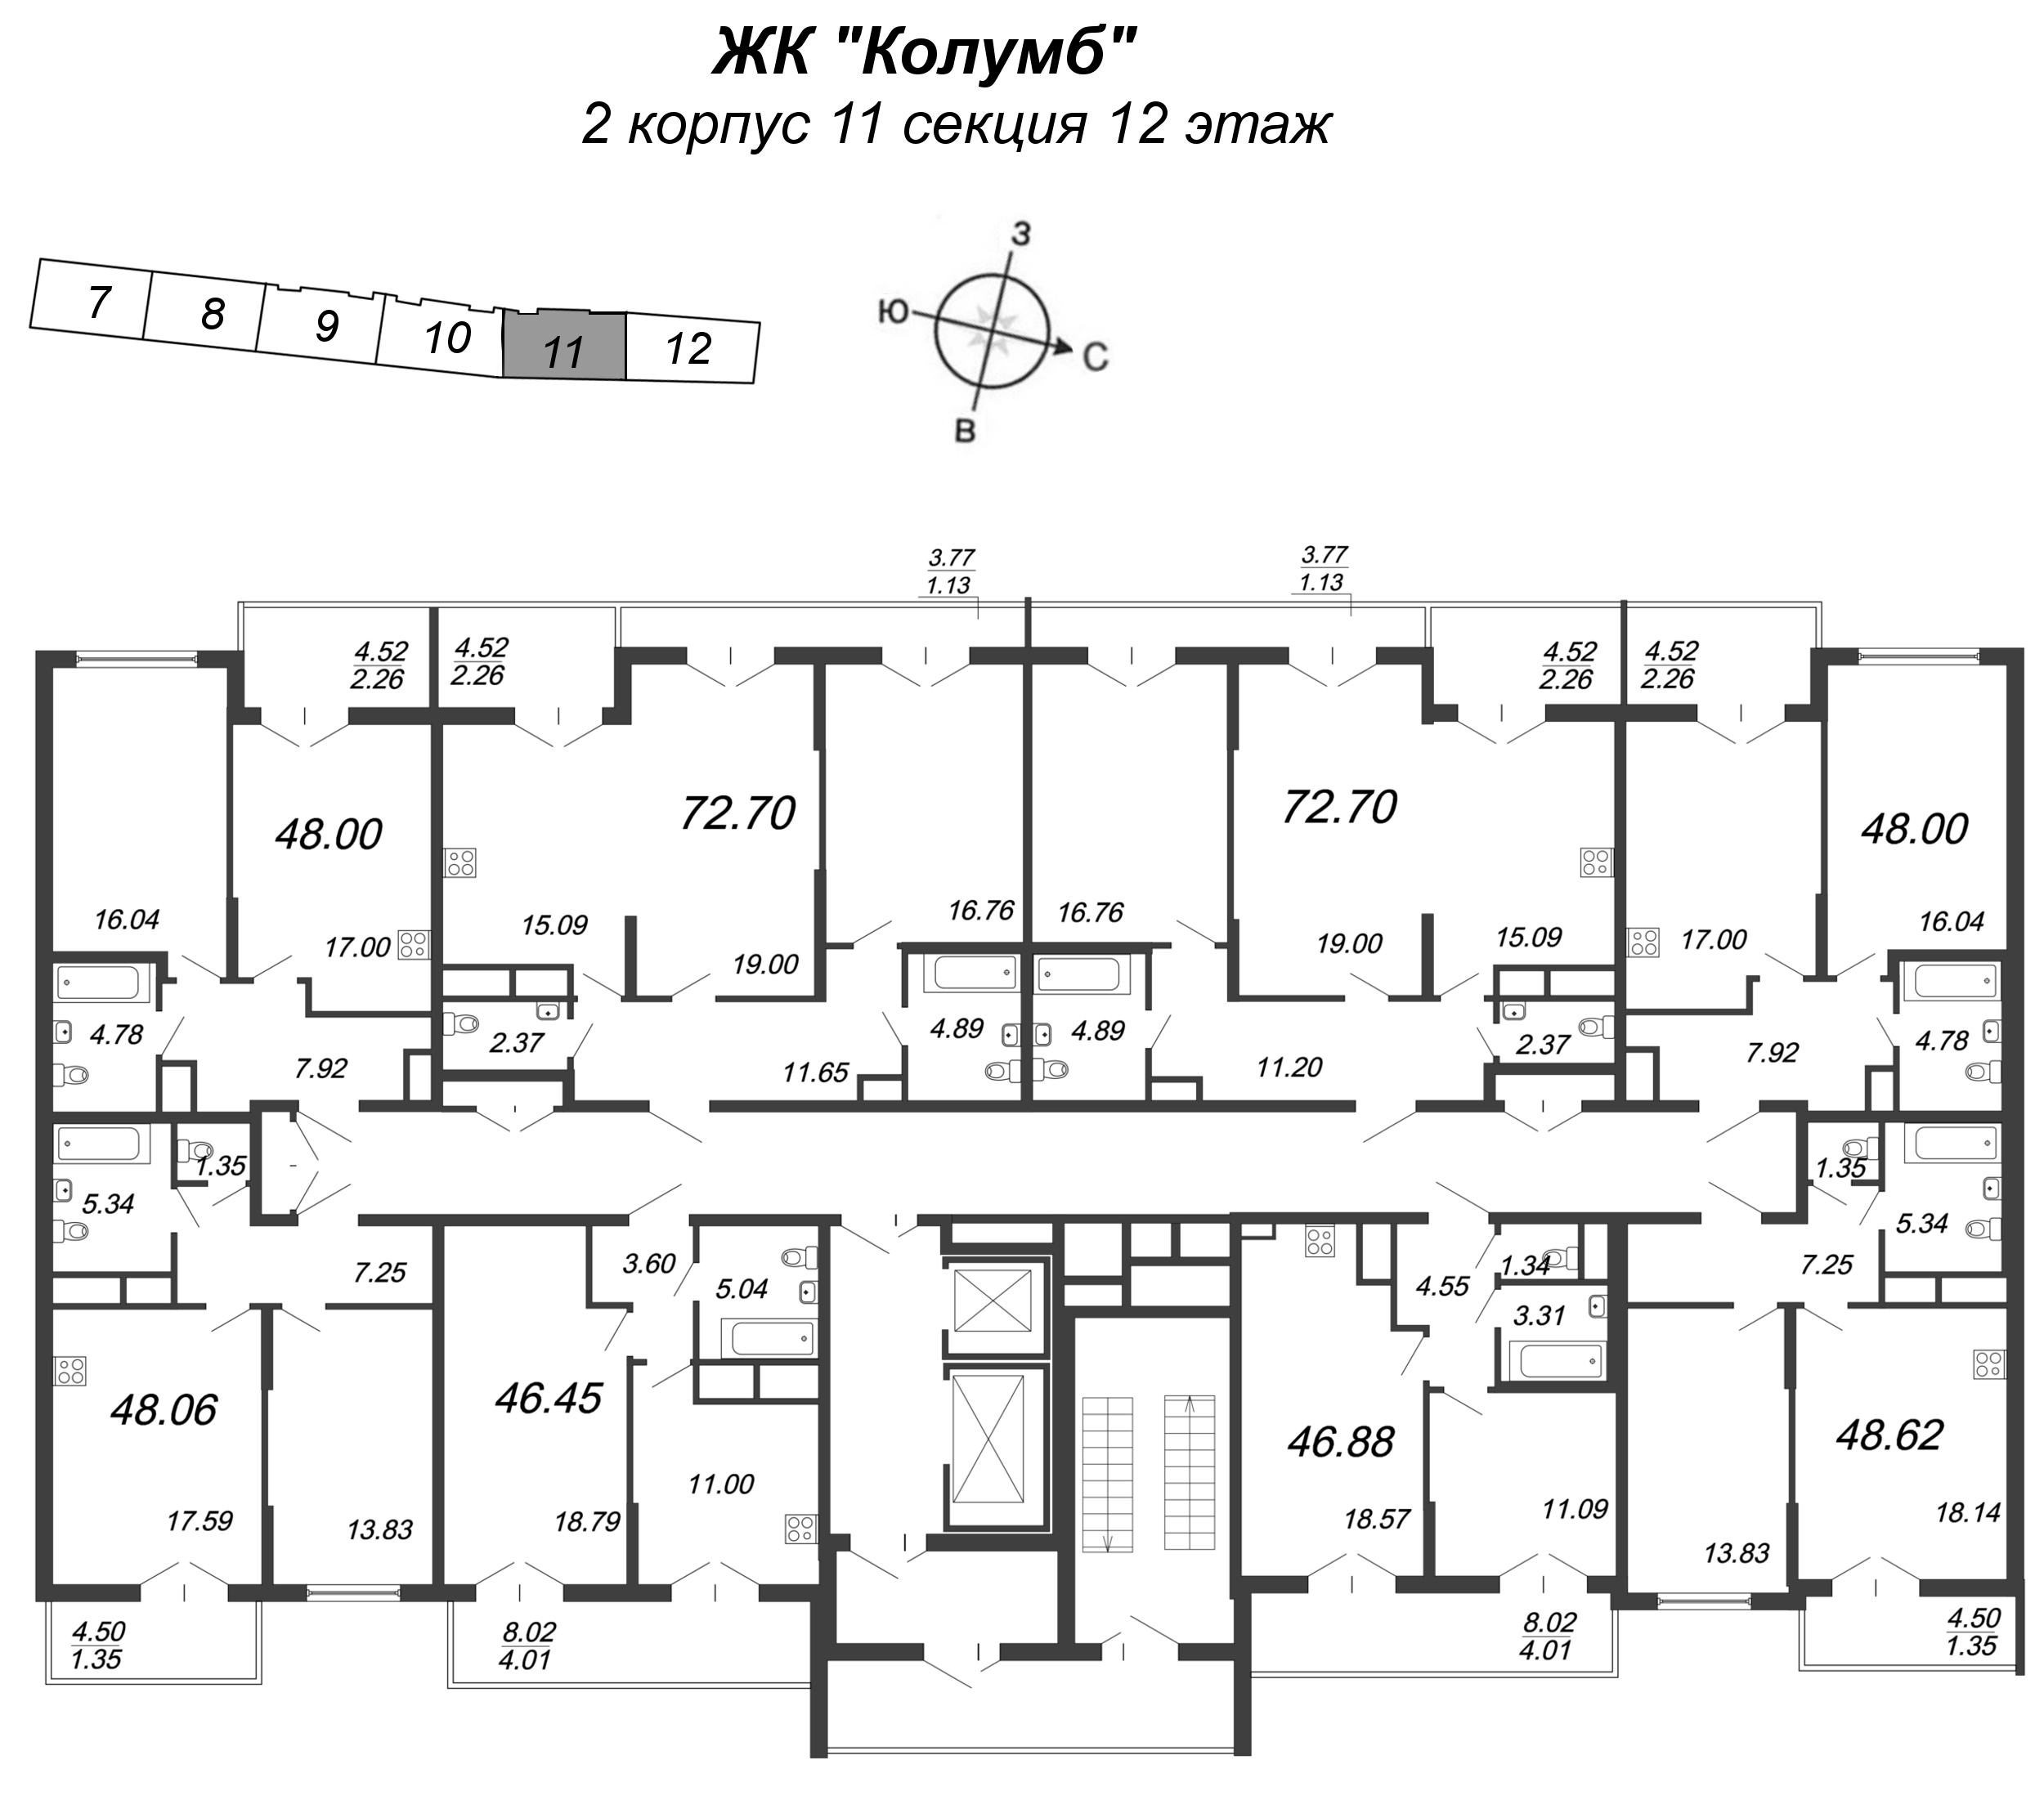 2-комнатная (Евро) квартира, 47.9 м² - планировка этажа